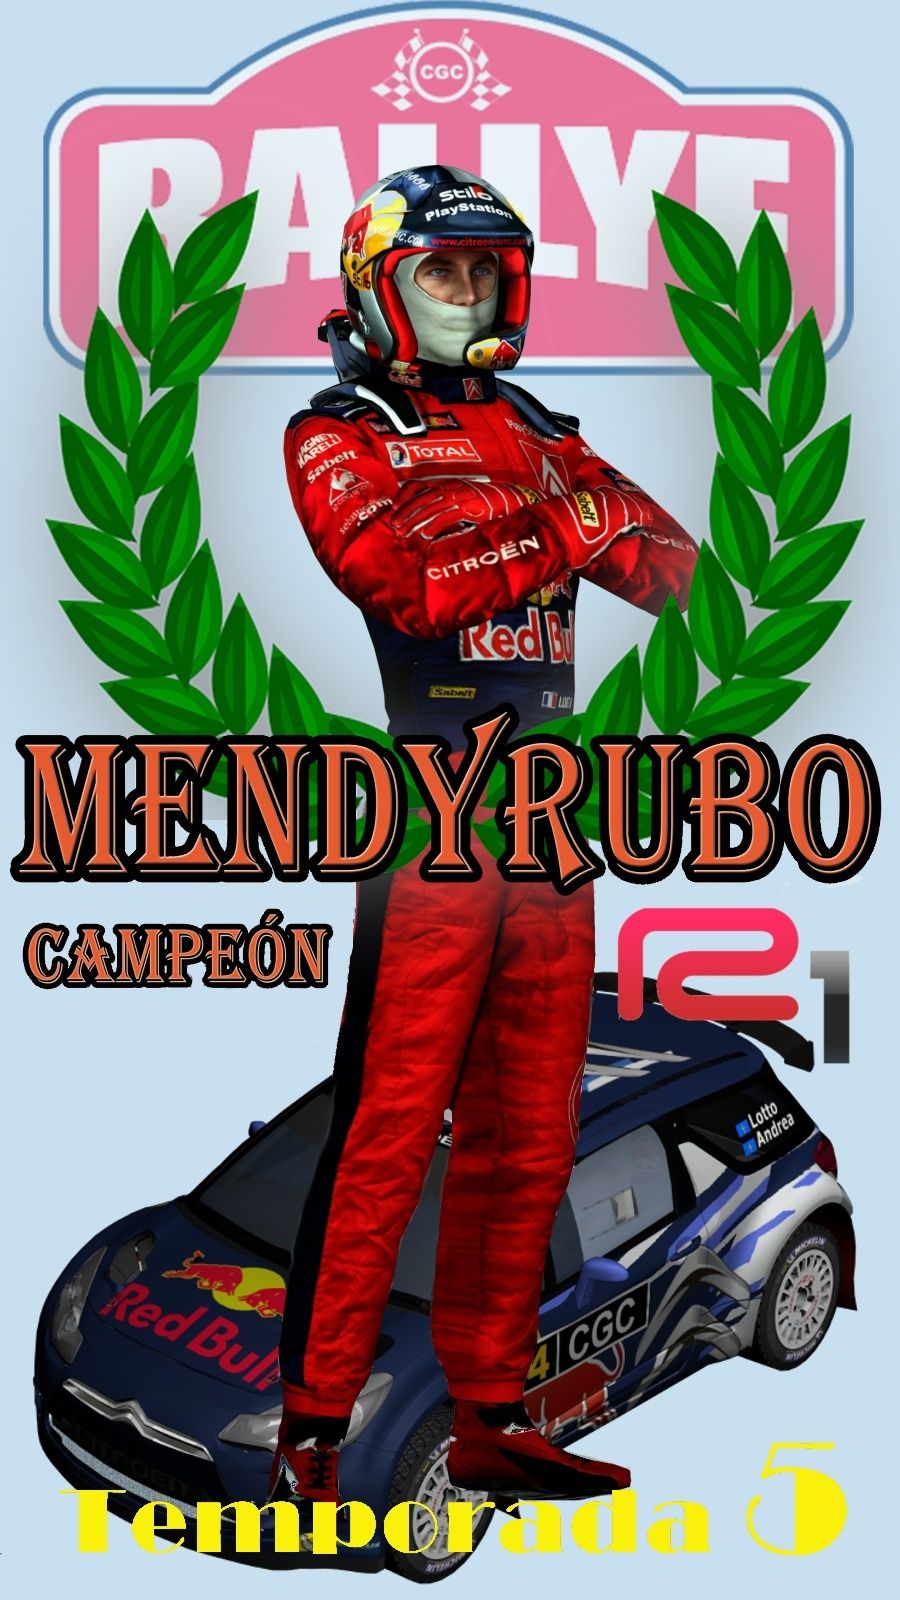 Resumen piloto a piloto de la Temporada 5 de rallys de CGC Campeo11